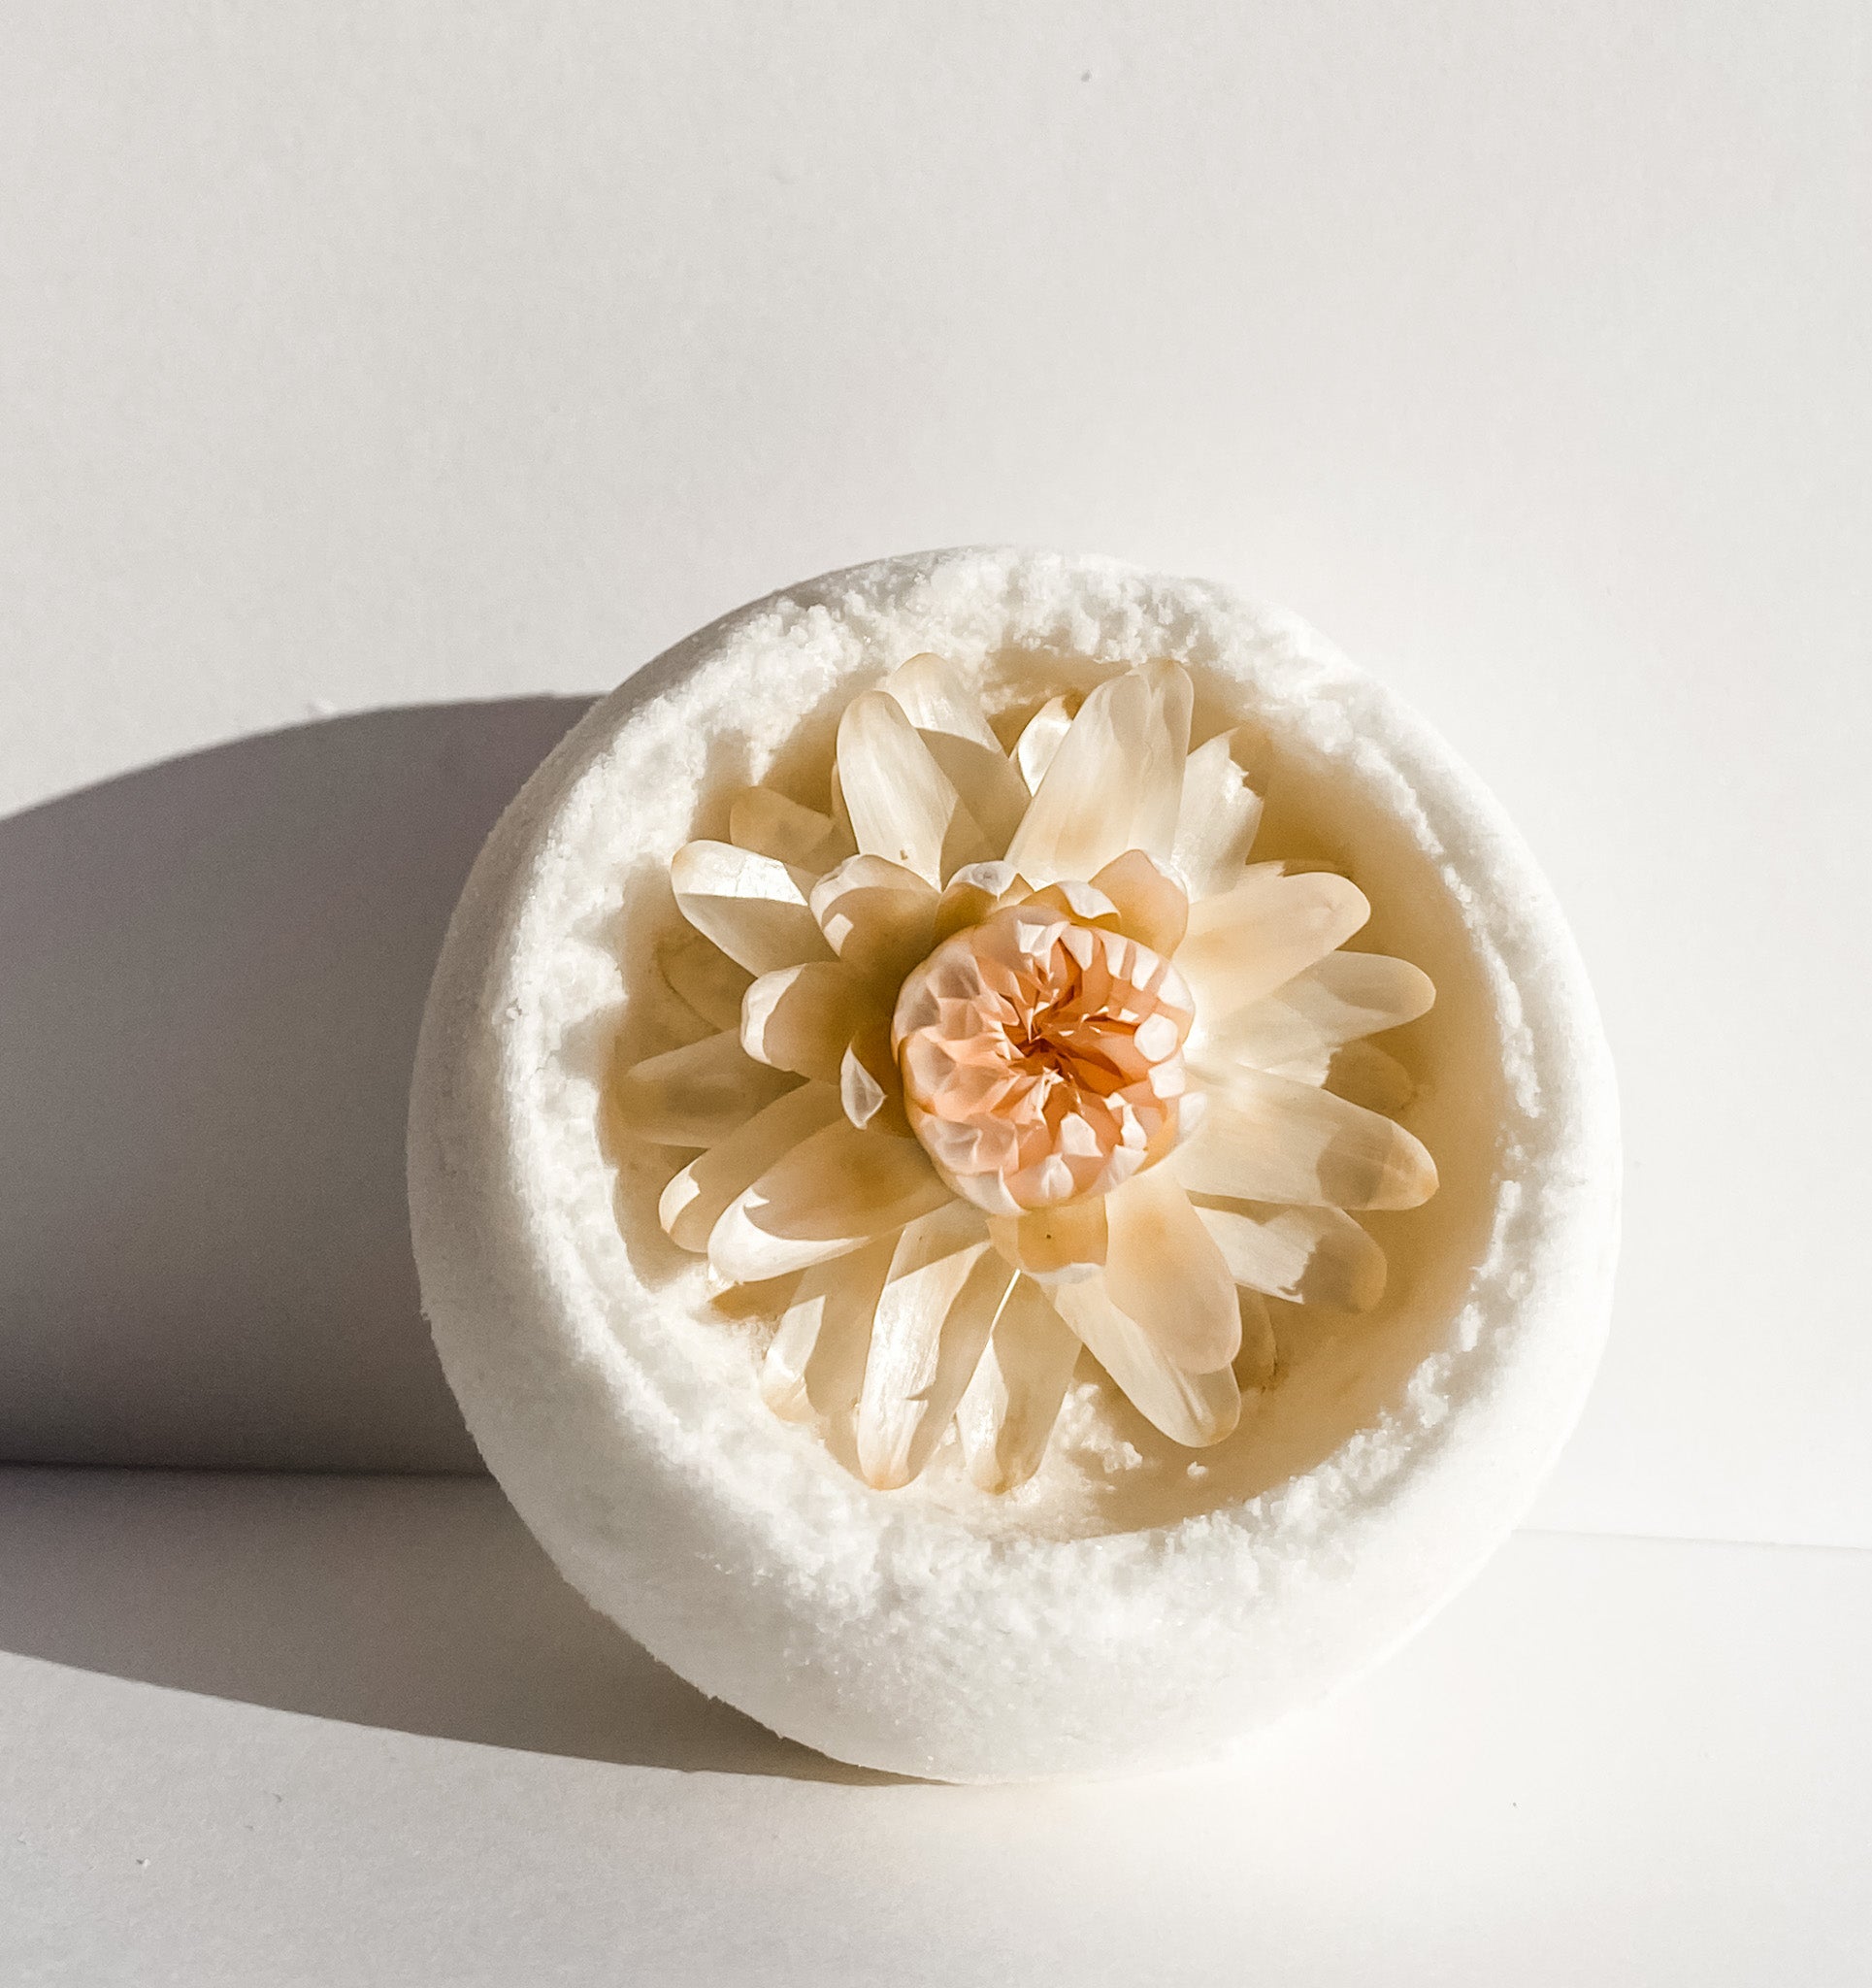 Flower Bath - Vegan Bath Bomb - Handmade with Natural Ingredients. Hidden Forest Naturals